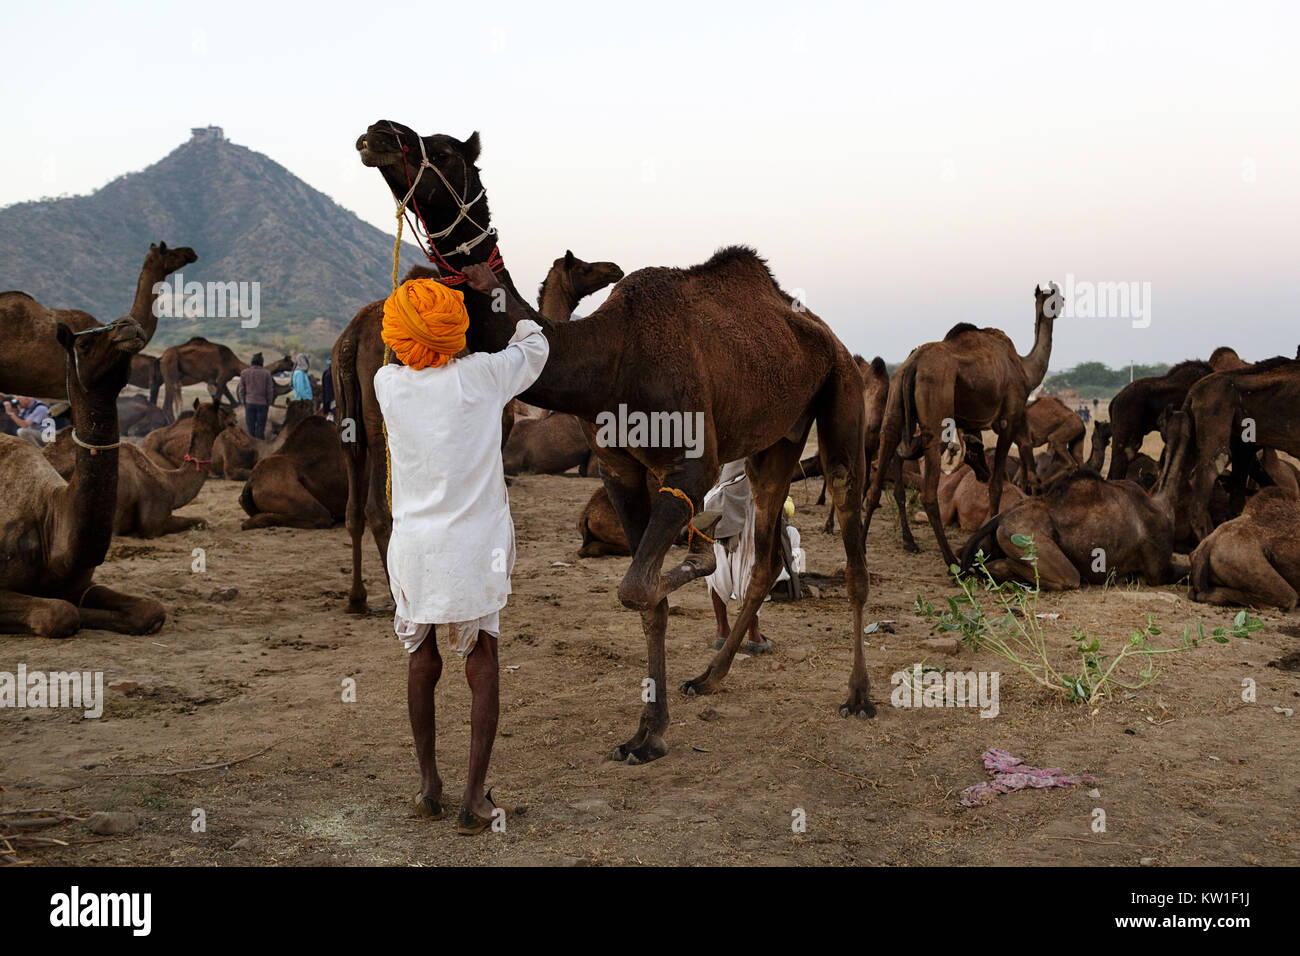 Scene at Pushkar Camel Fair, man in orange turban preparing a camel for the fair, Pushkar, Ajmer, Rajasthan, India Stock Photo